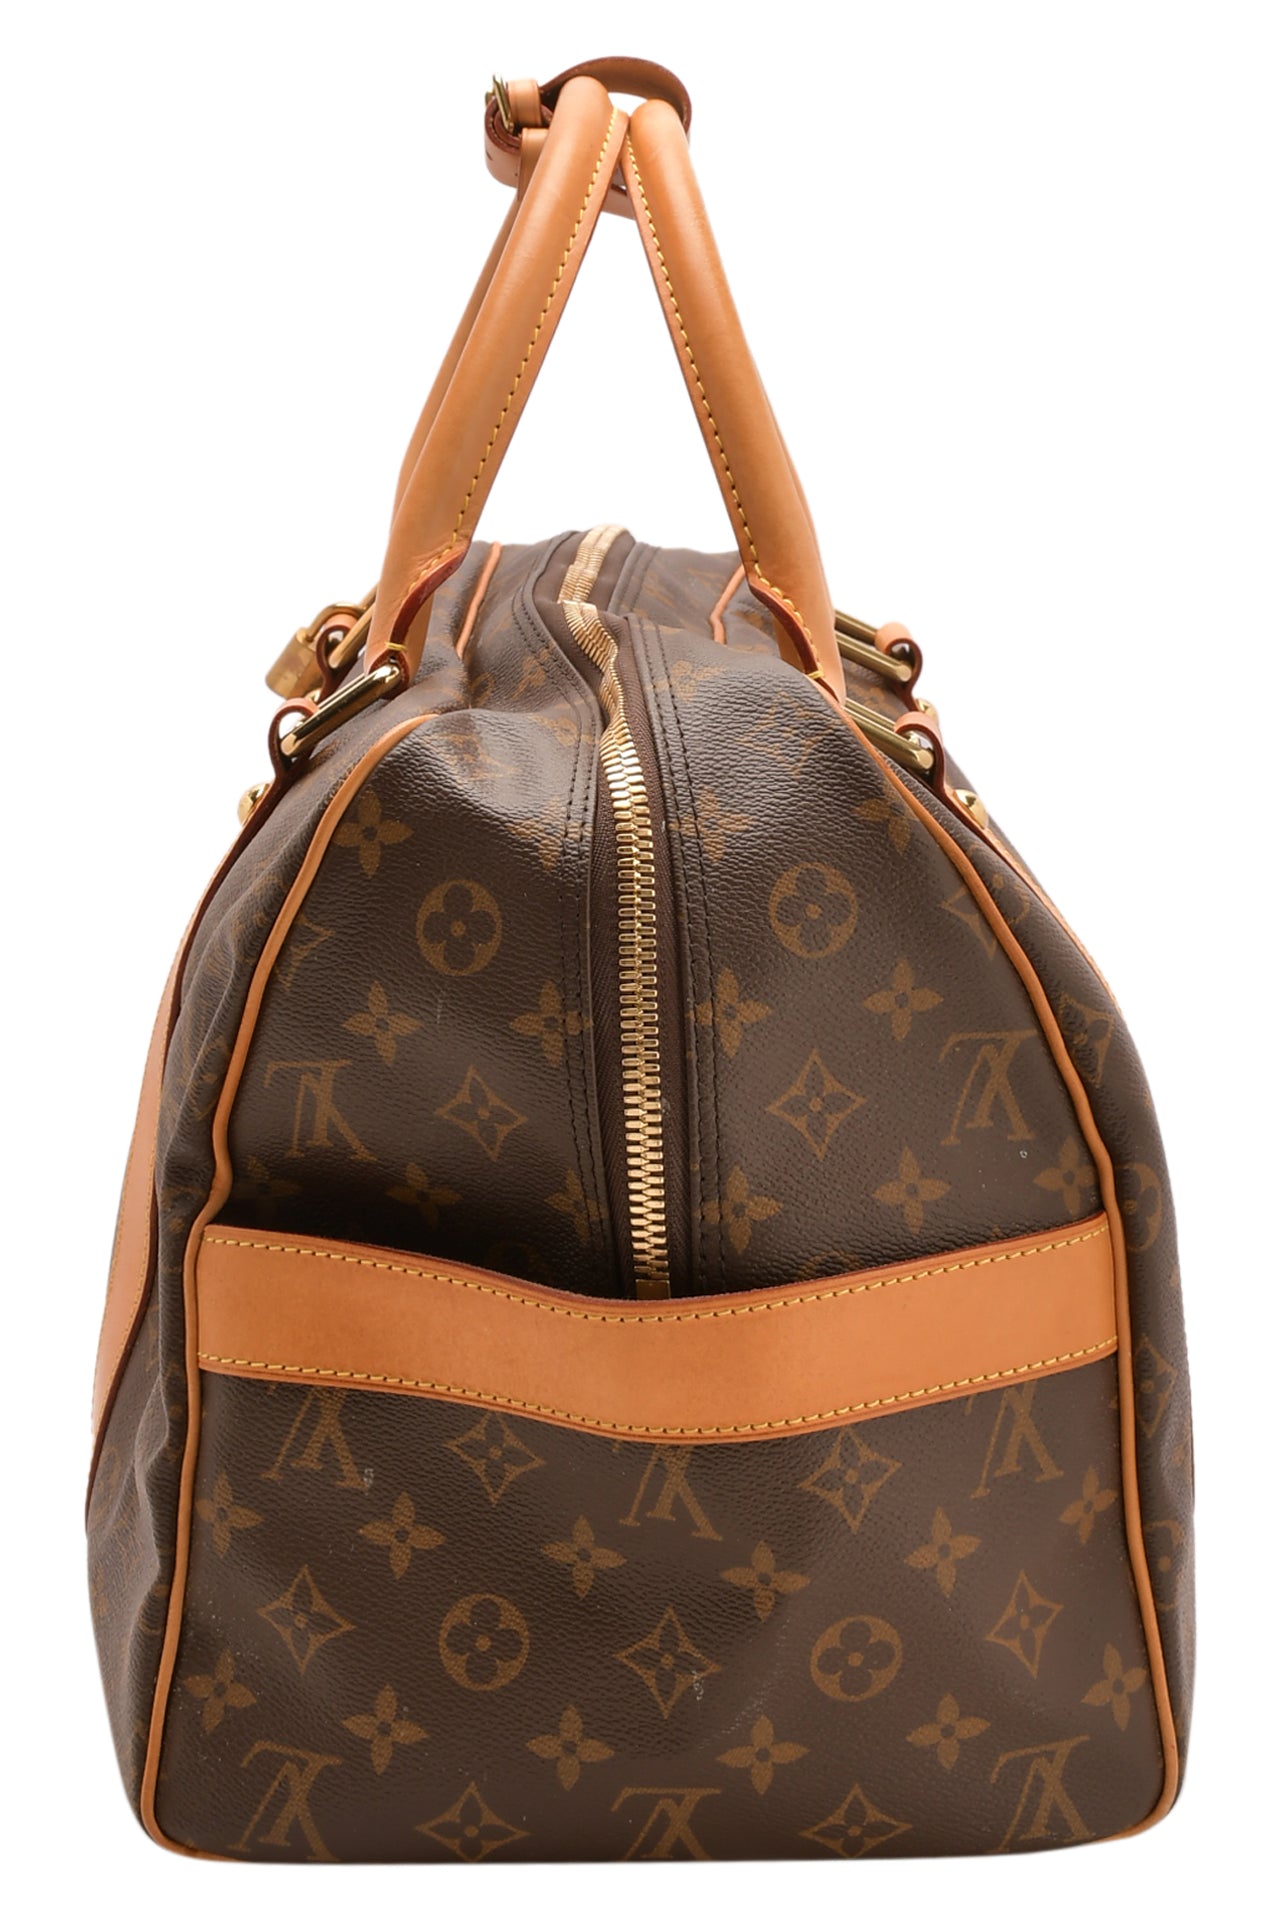 Louis Vuitton Monogram Carryall Bag